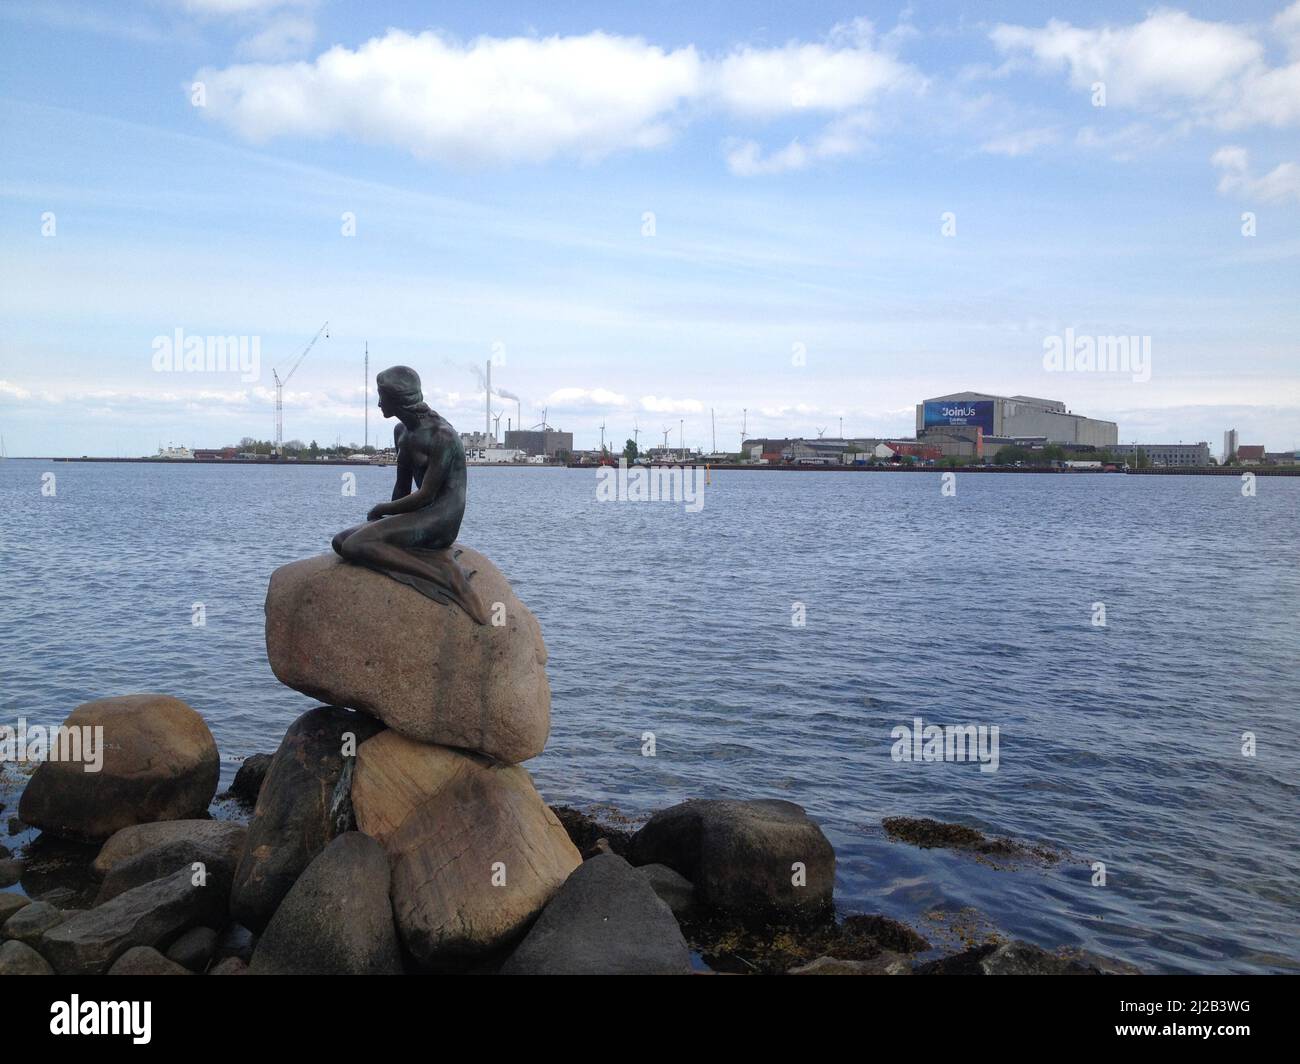 The Little Mermaid, Copenhagen landmark Stock Photo - Alamy